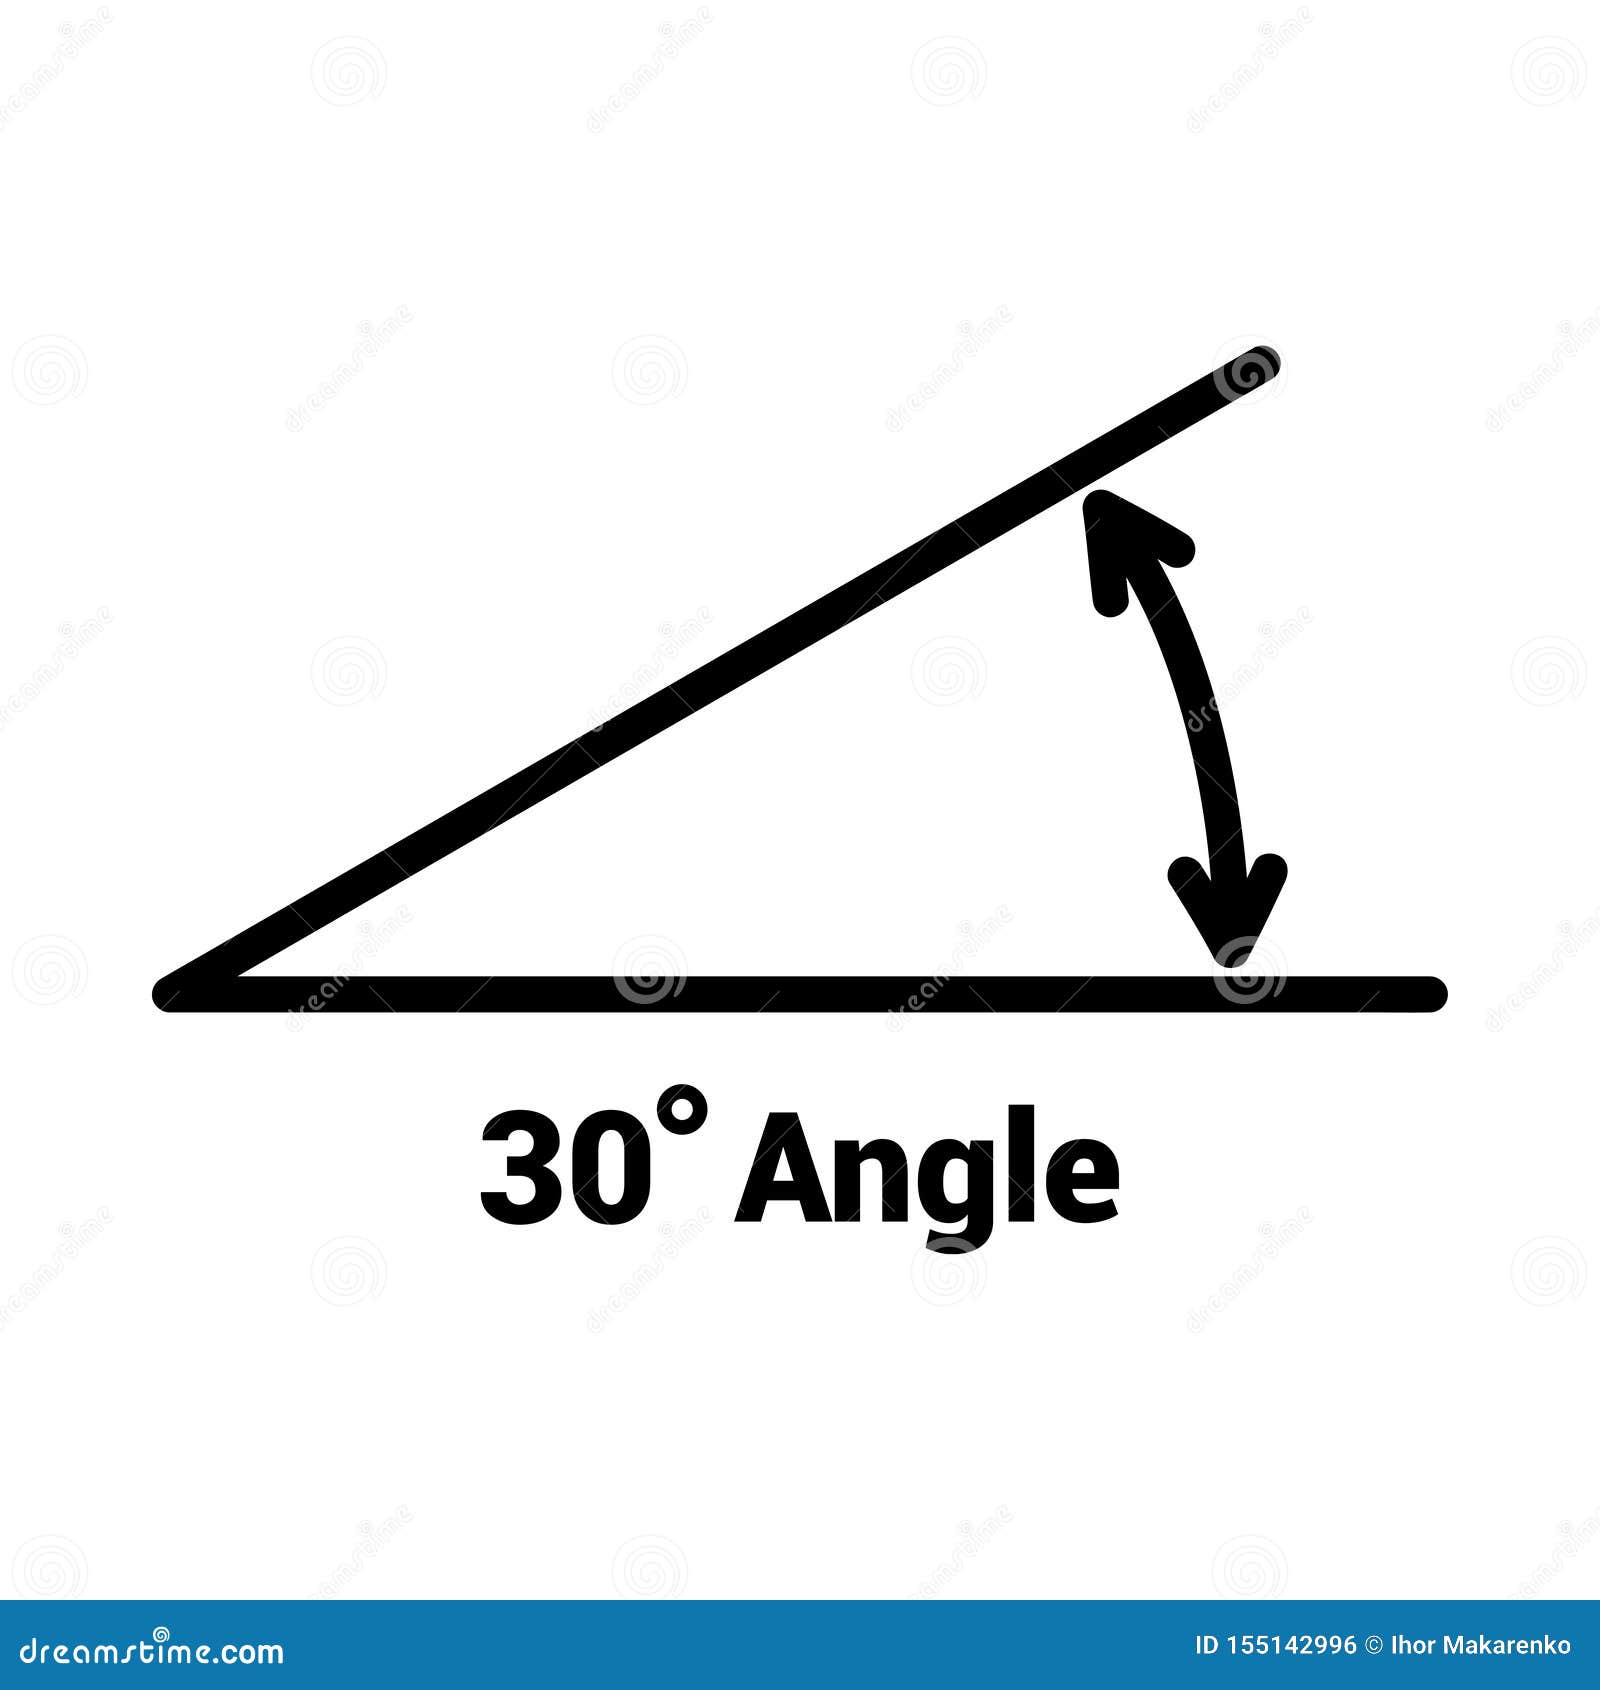 Degree Angle Stock Illustrations – 14,749 Degree Angle Stock